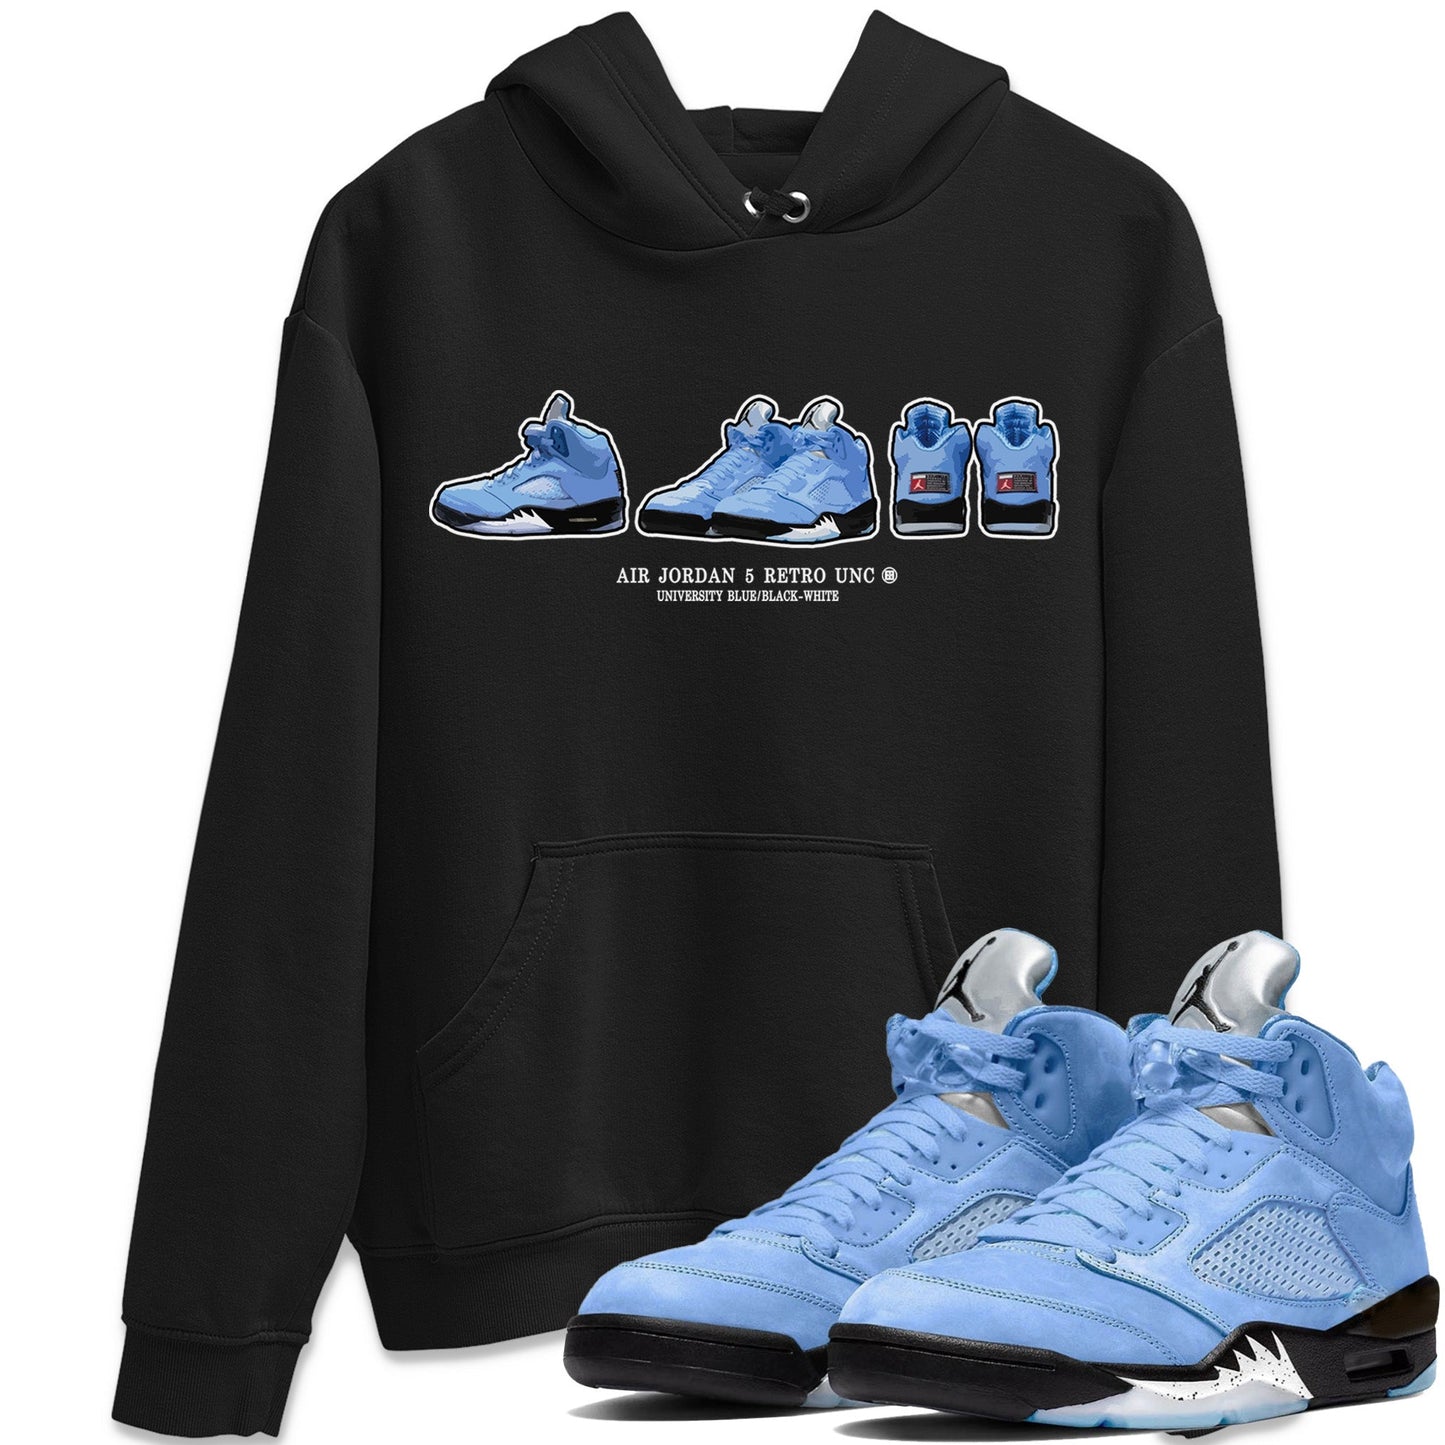 Air Jordan 5 UNC Shirt To Match Jordans Sneaker Prelude Sneaker Tees Air Jordan 5 Retro UNC Drip Gear Zone Sneaker Matching Clothing Unisex Shirts Black 1